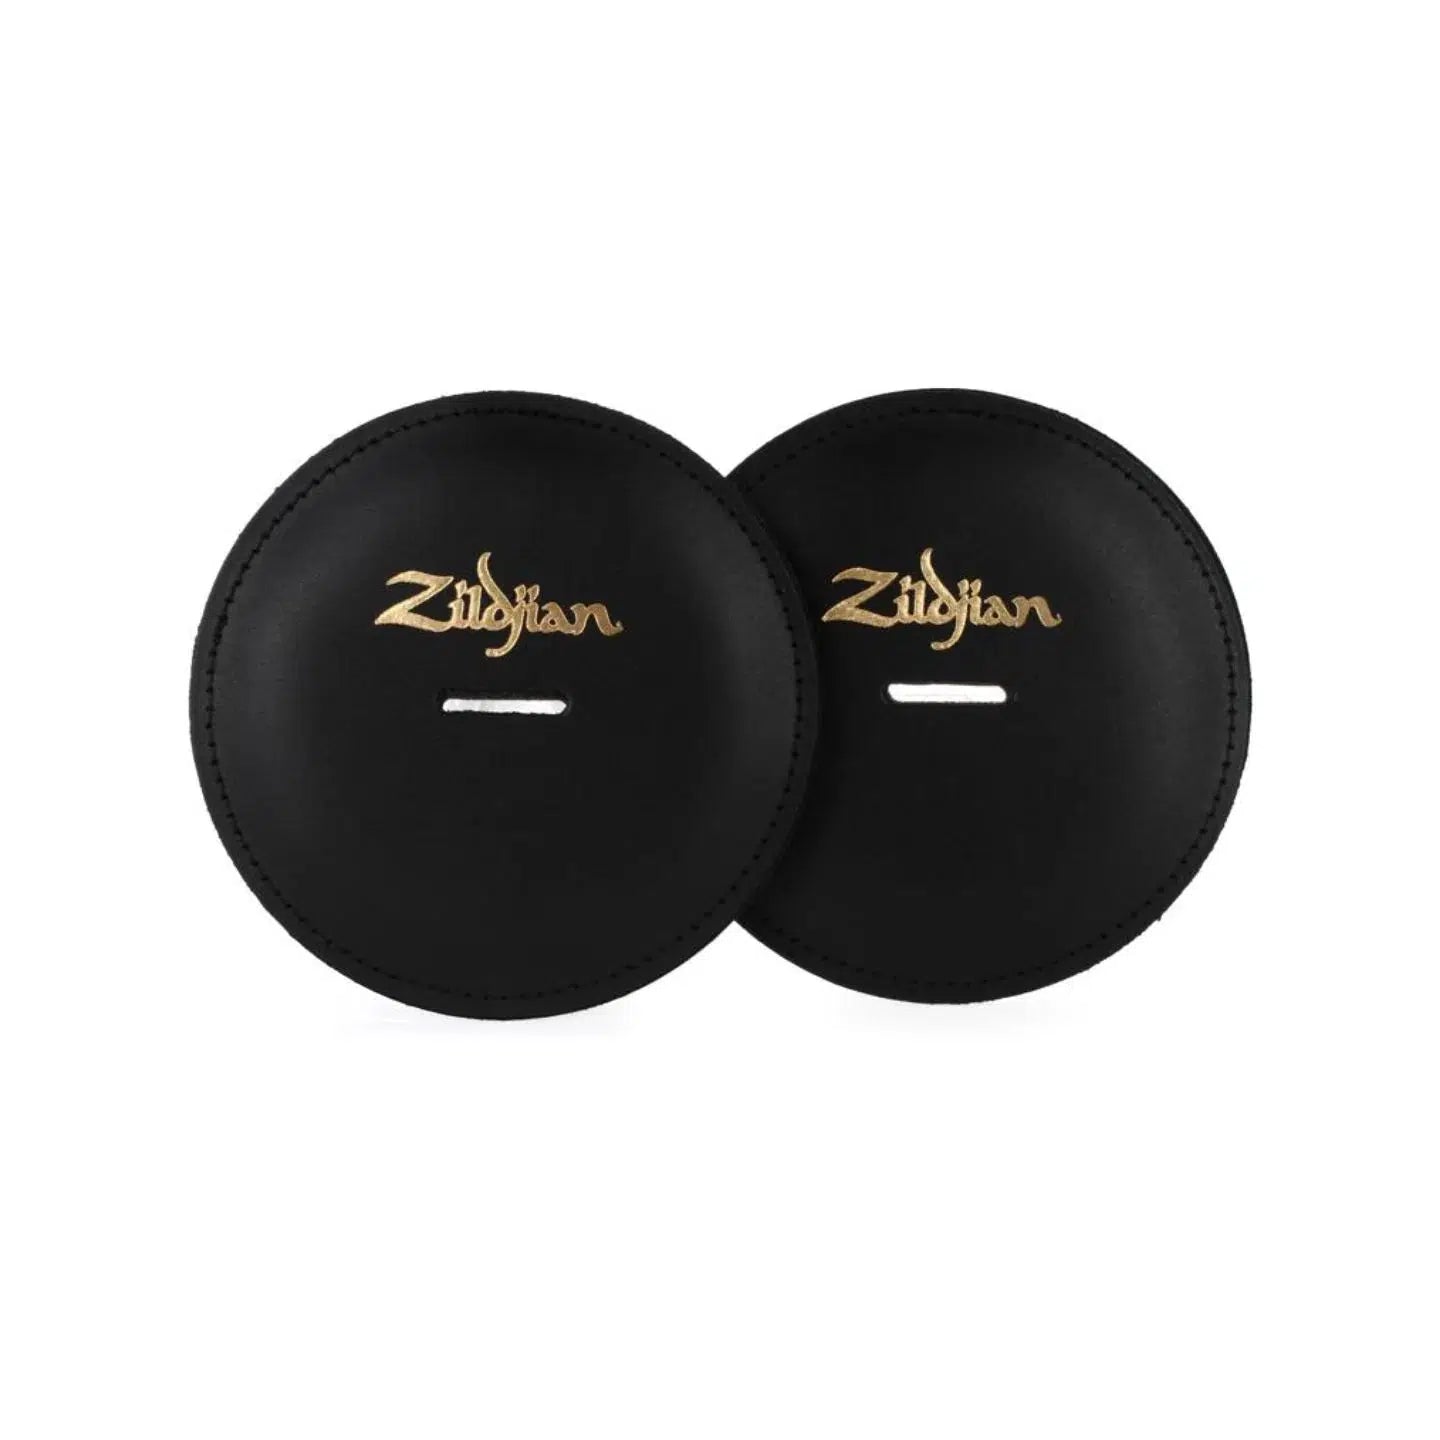 Zildjian Leather Cymbal Pads - Pair